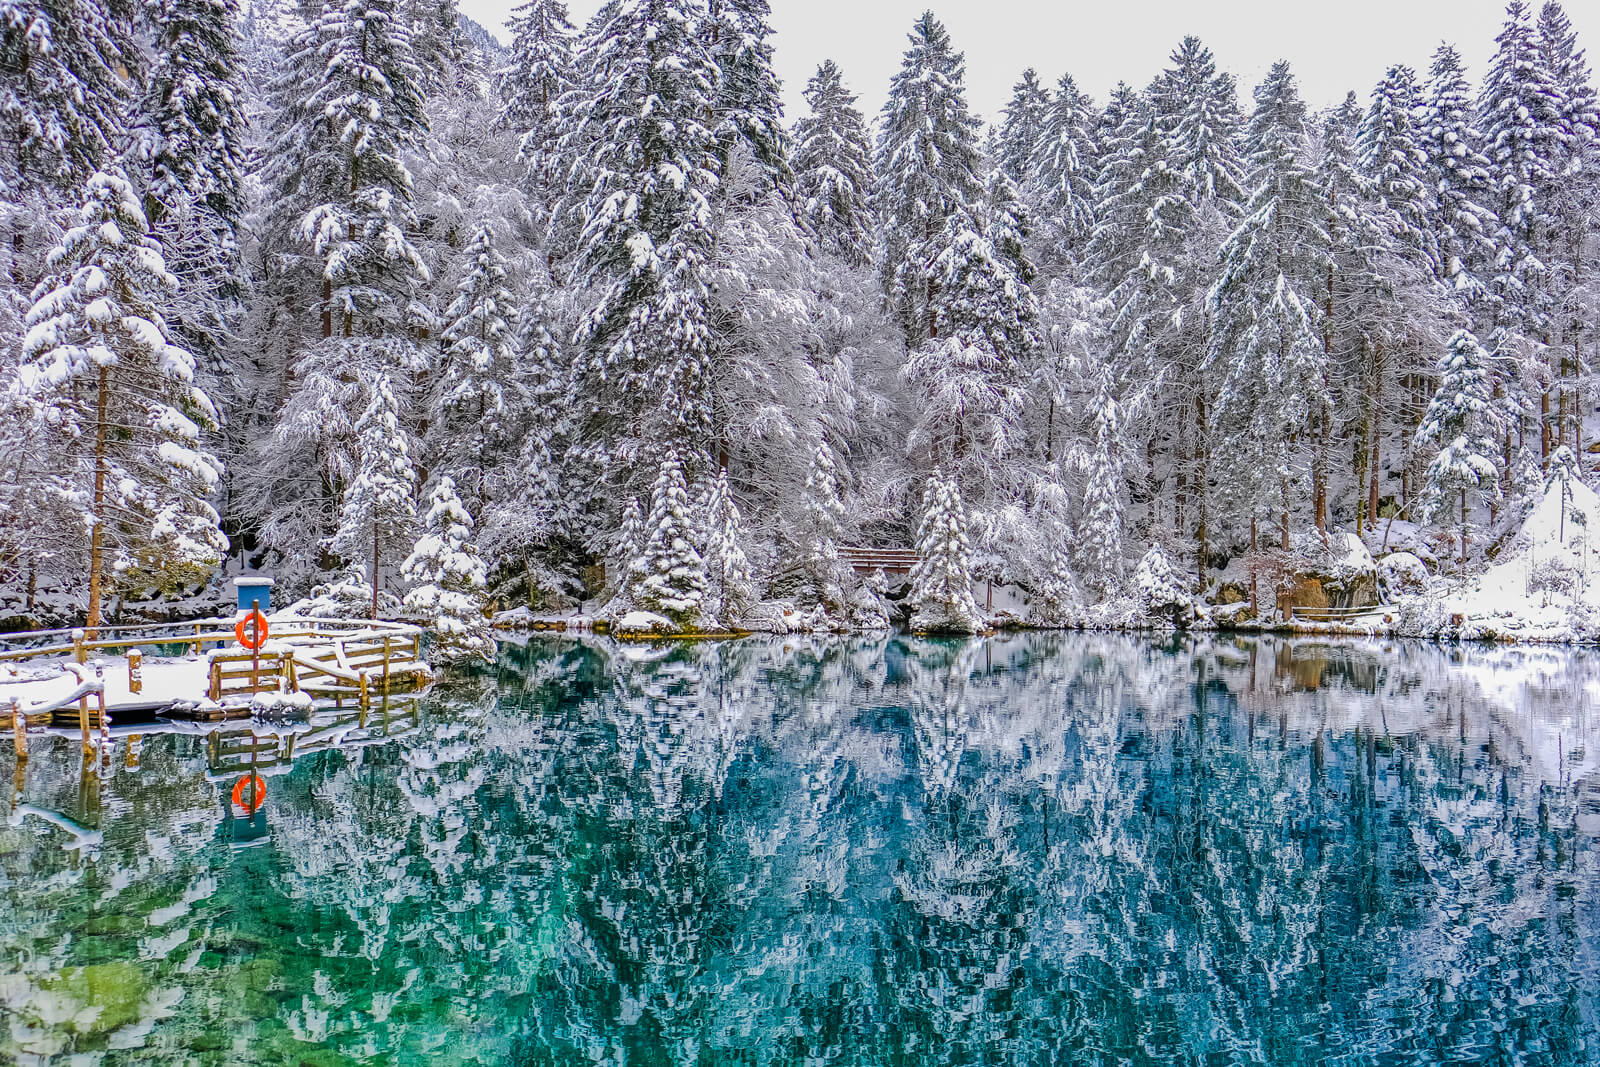 Lake Blausee in Switzerland during winter